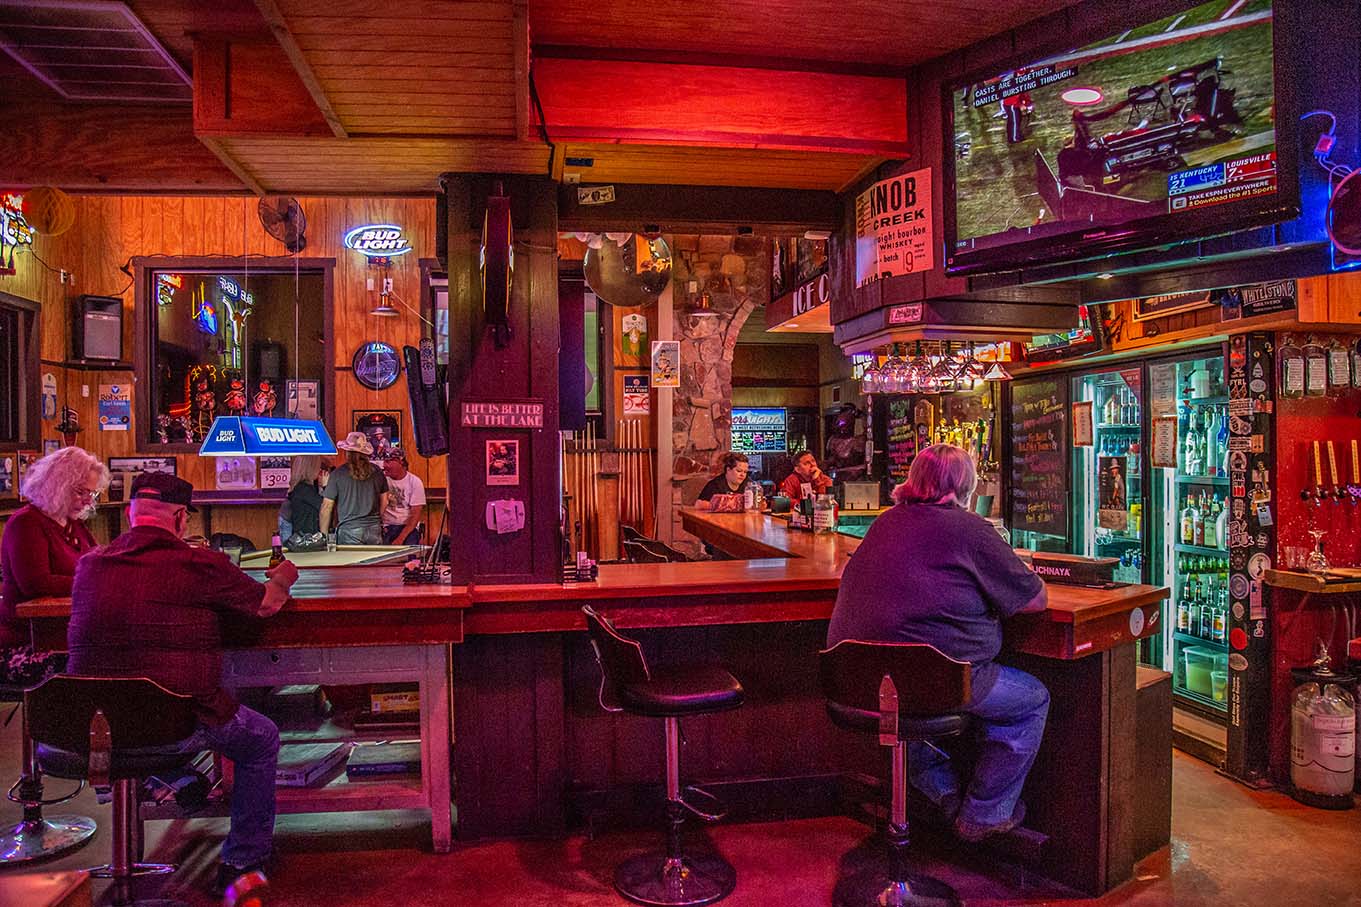 Rumi's Tavern - North Lake Travis Live Music Bar and Restaurant